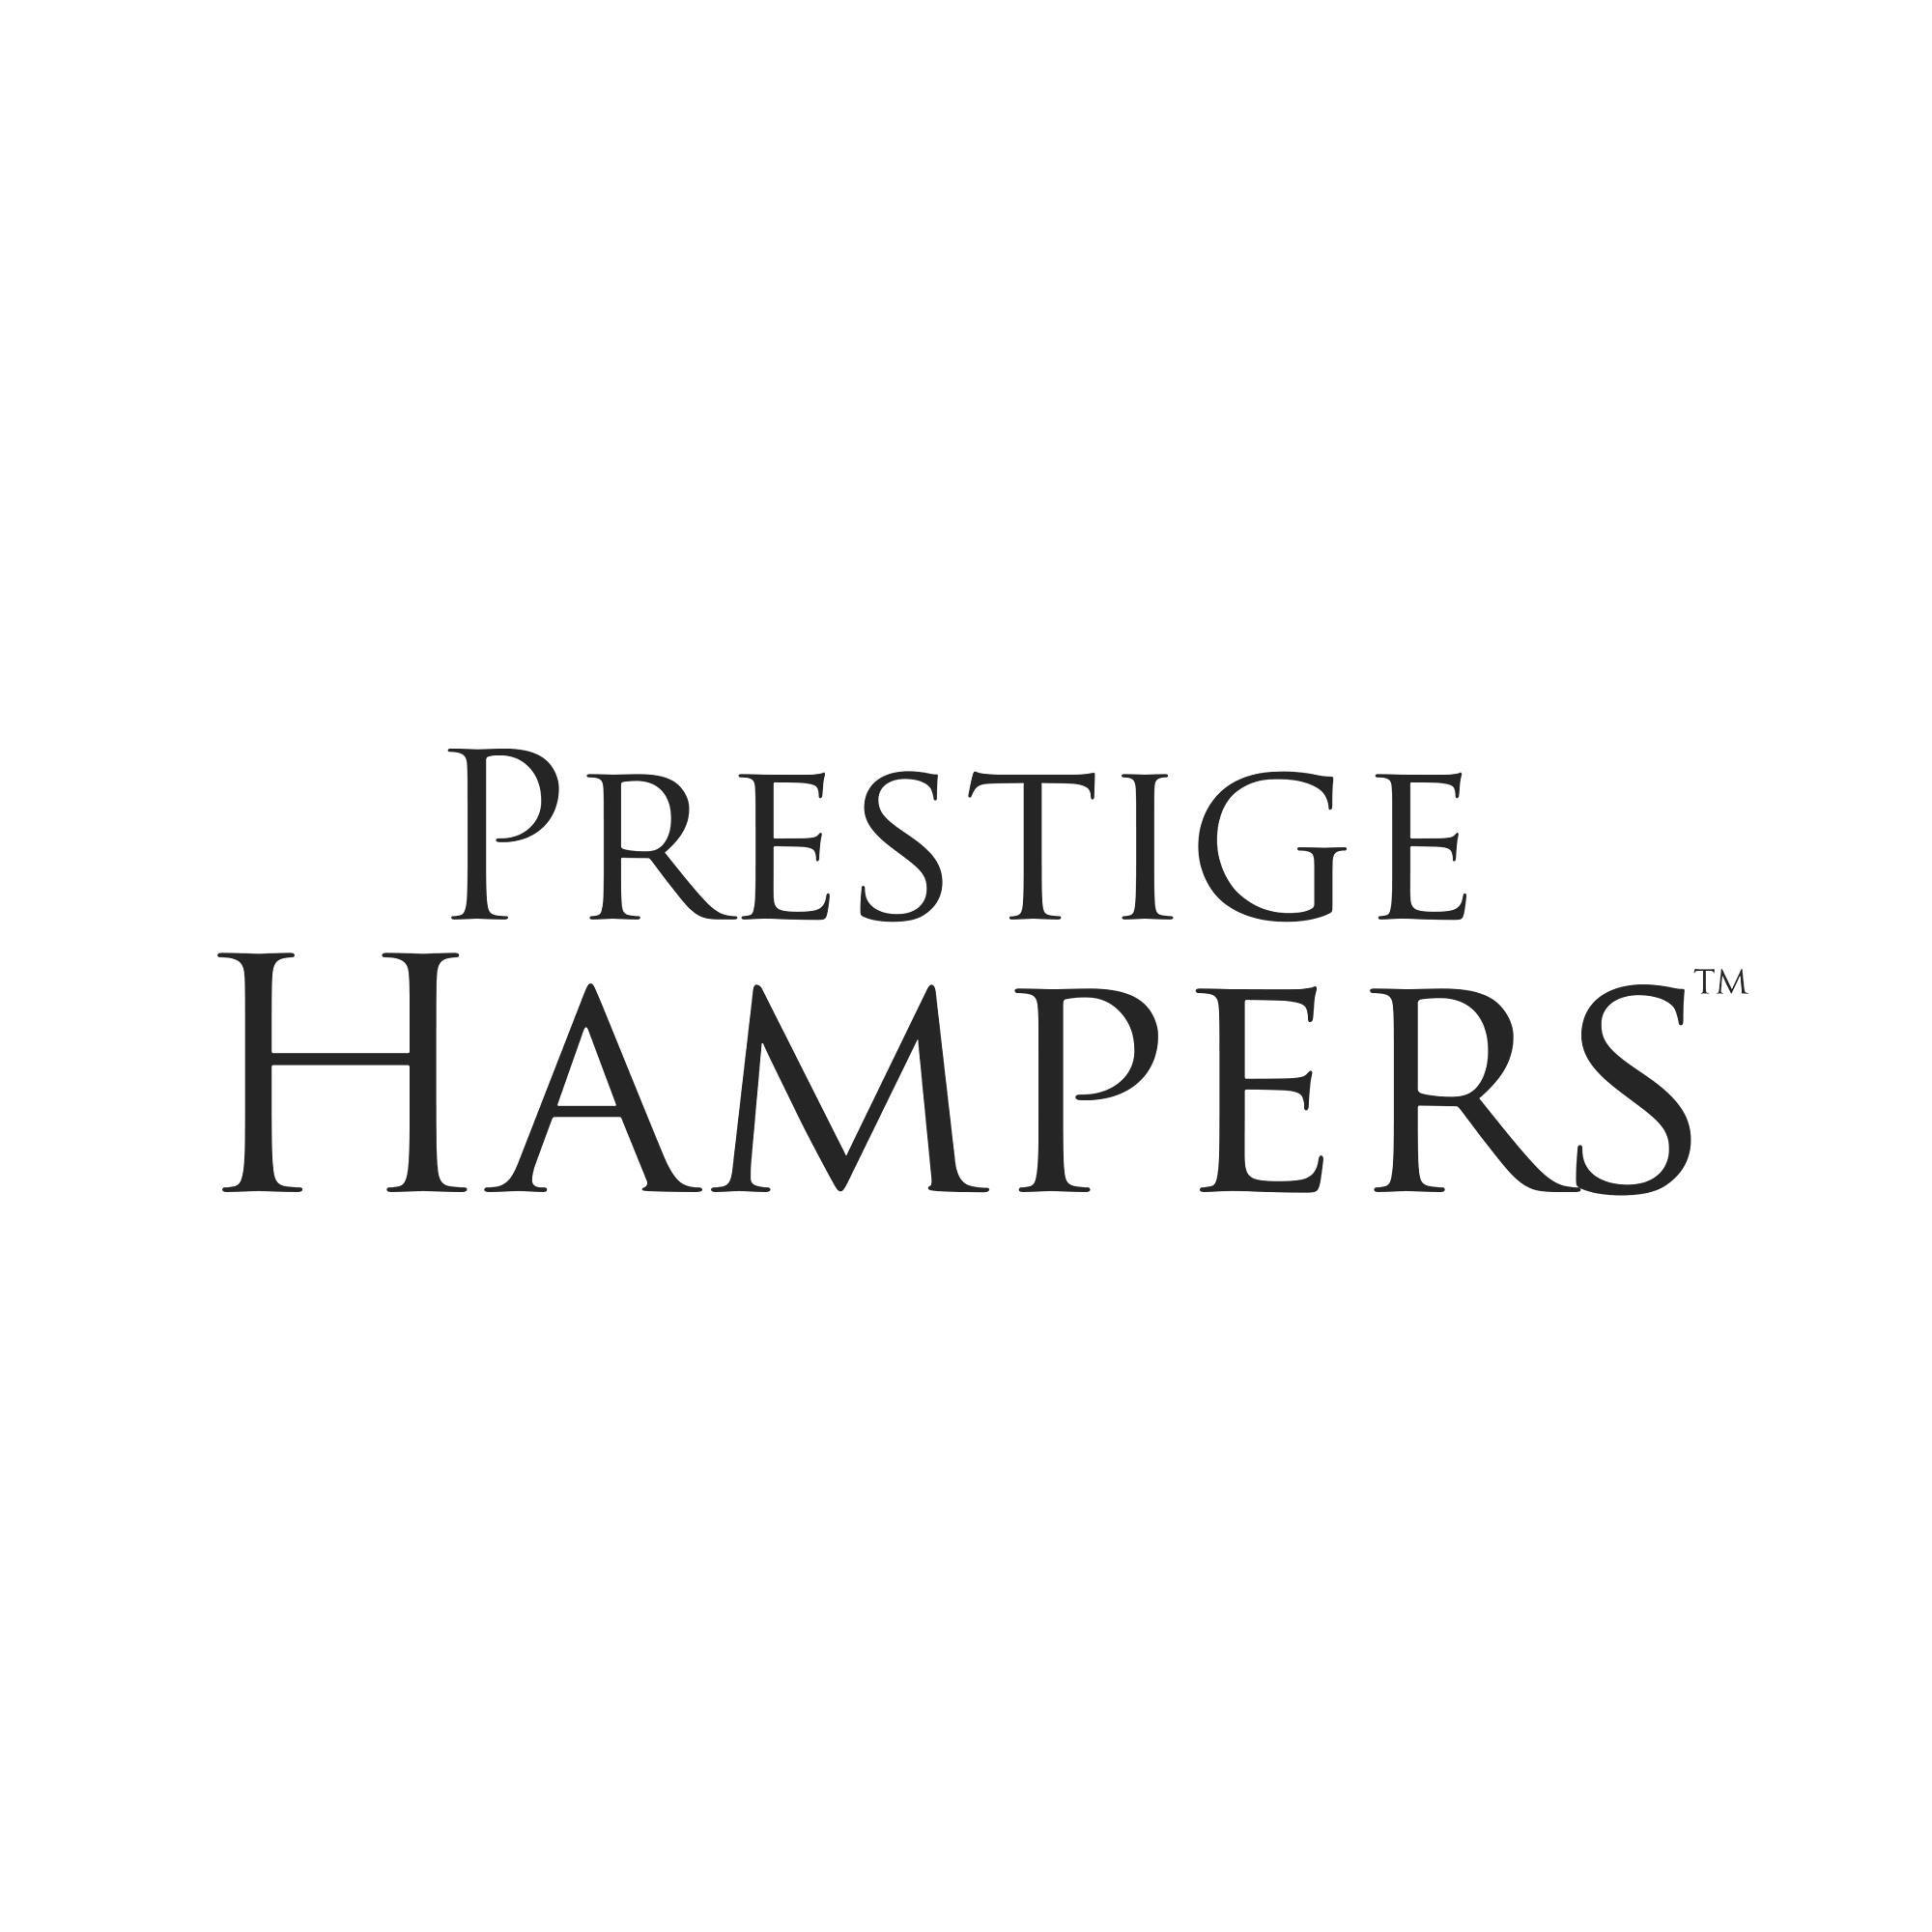 Prestige Hampers Coupons & Promo Codes